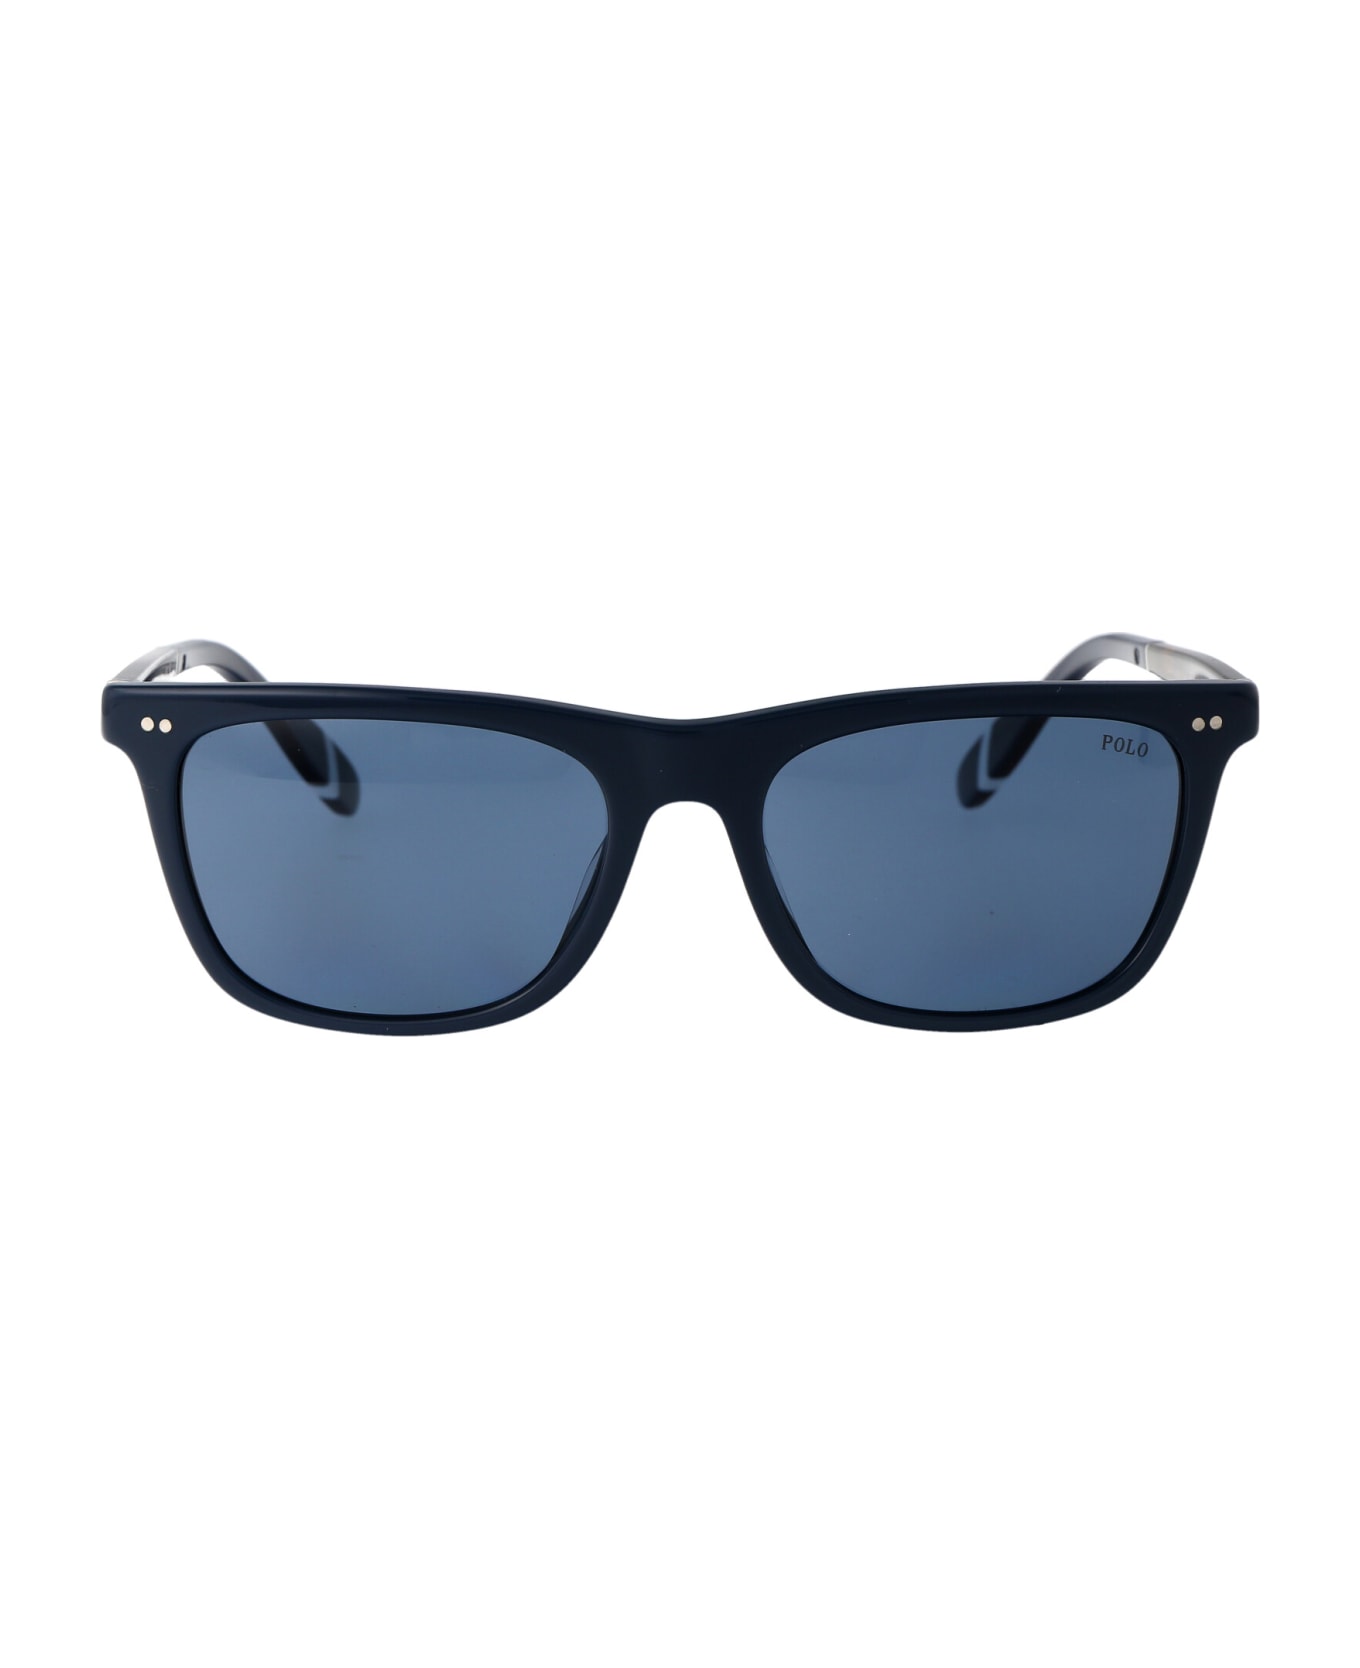 Polo Ralph Lauren 0ph4205u Sunglasses - 546580 Shiny Navy Blue サングラス